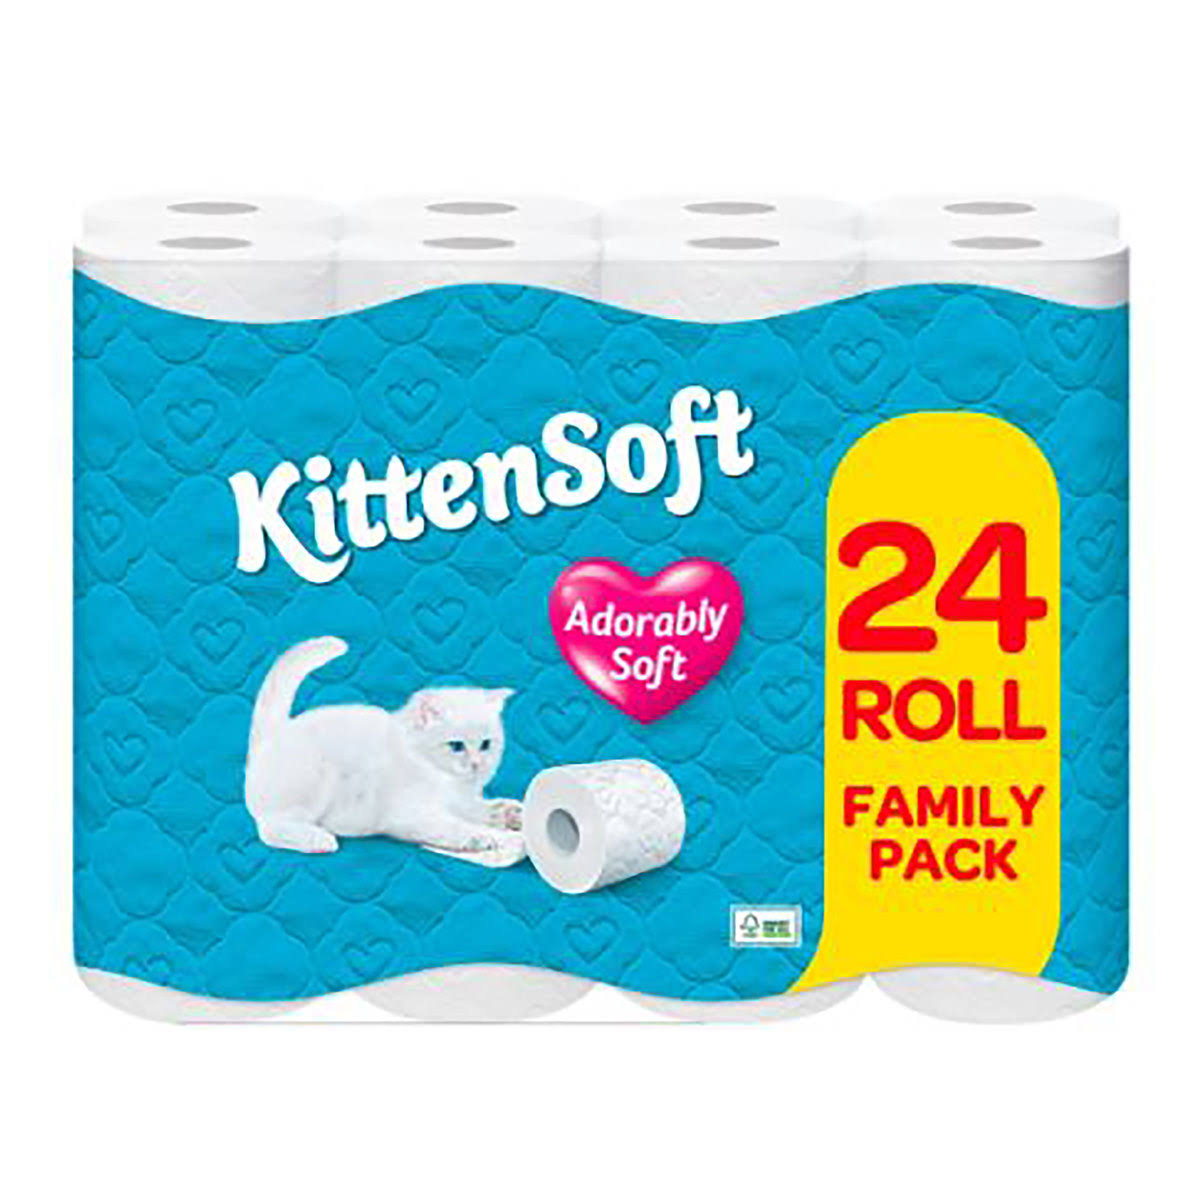 KittenSoft Adorably Soft Toilet Rolls - 24pk